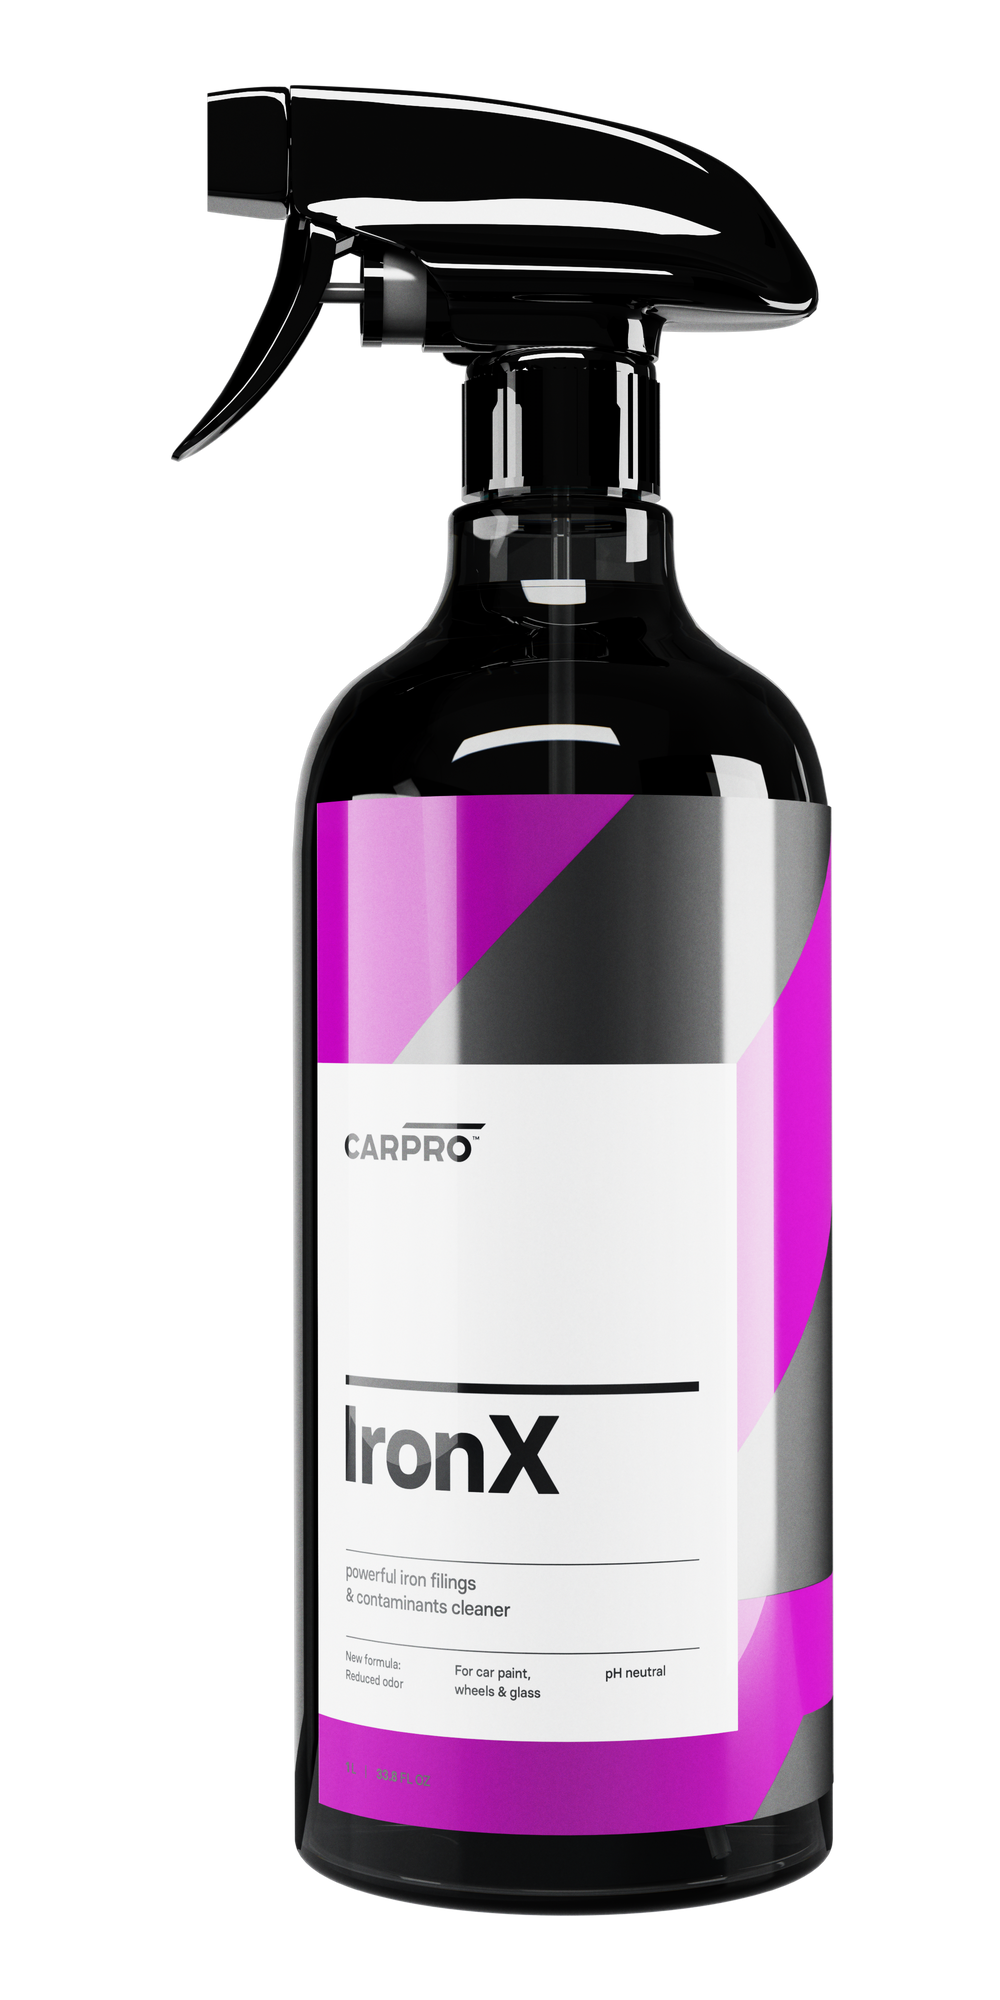 CARPRO IronX 1L - Iron filings and contaminants cleaner